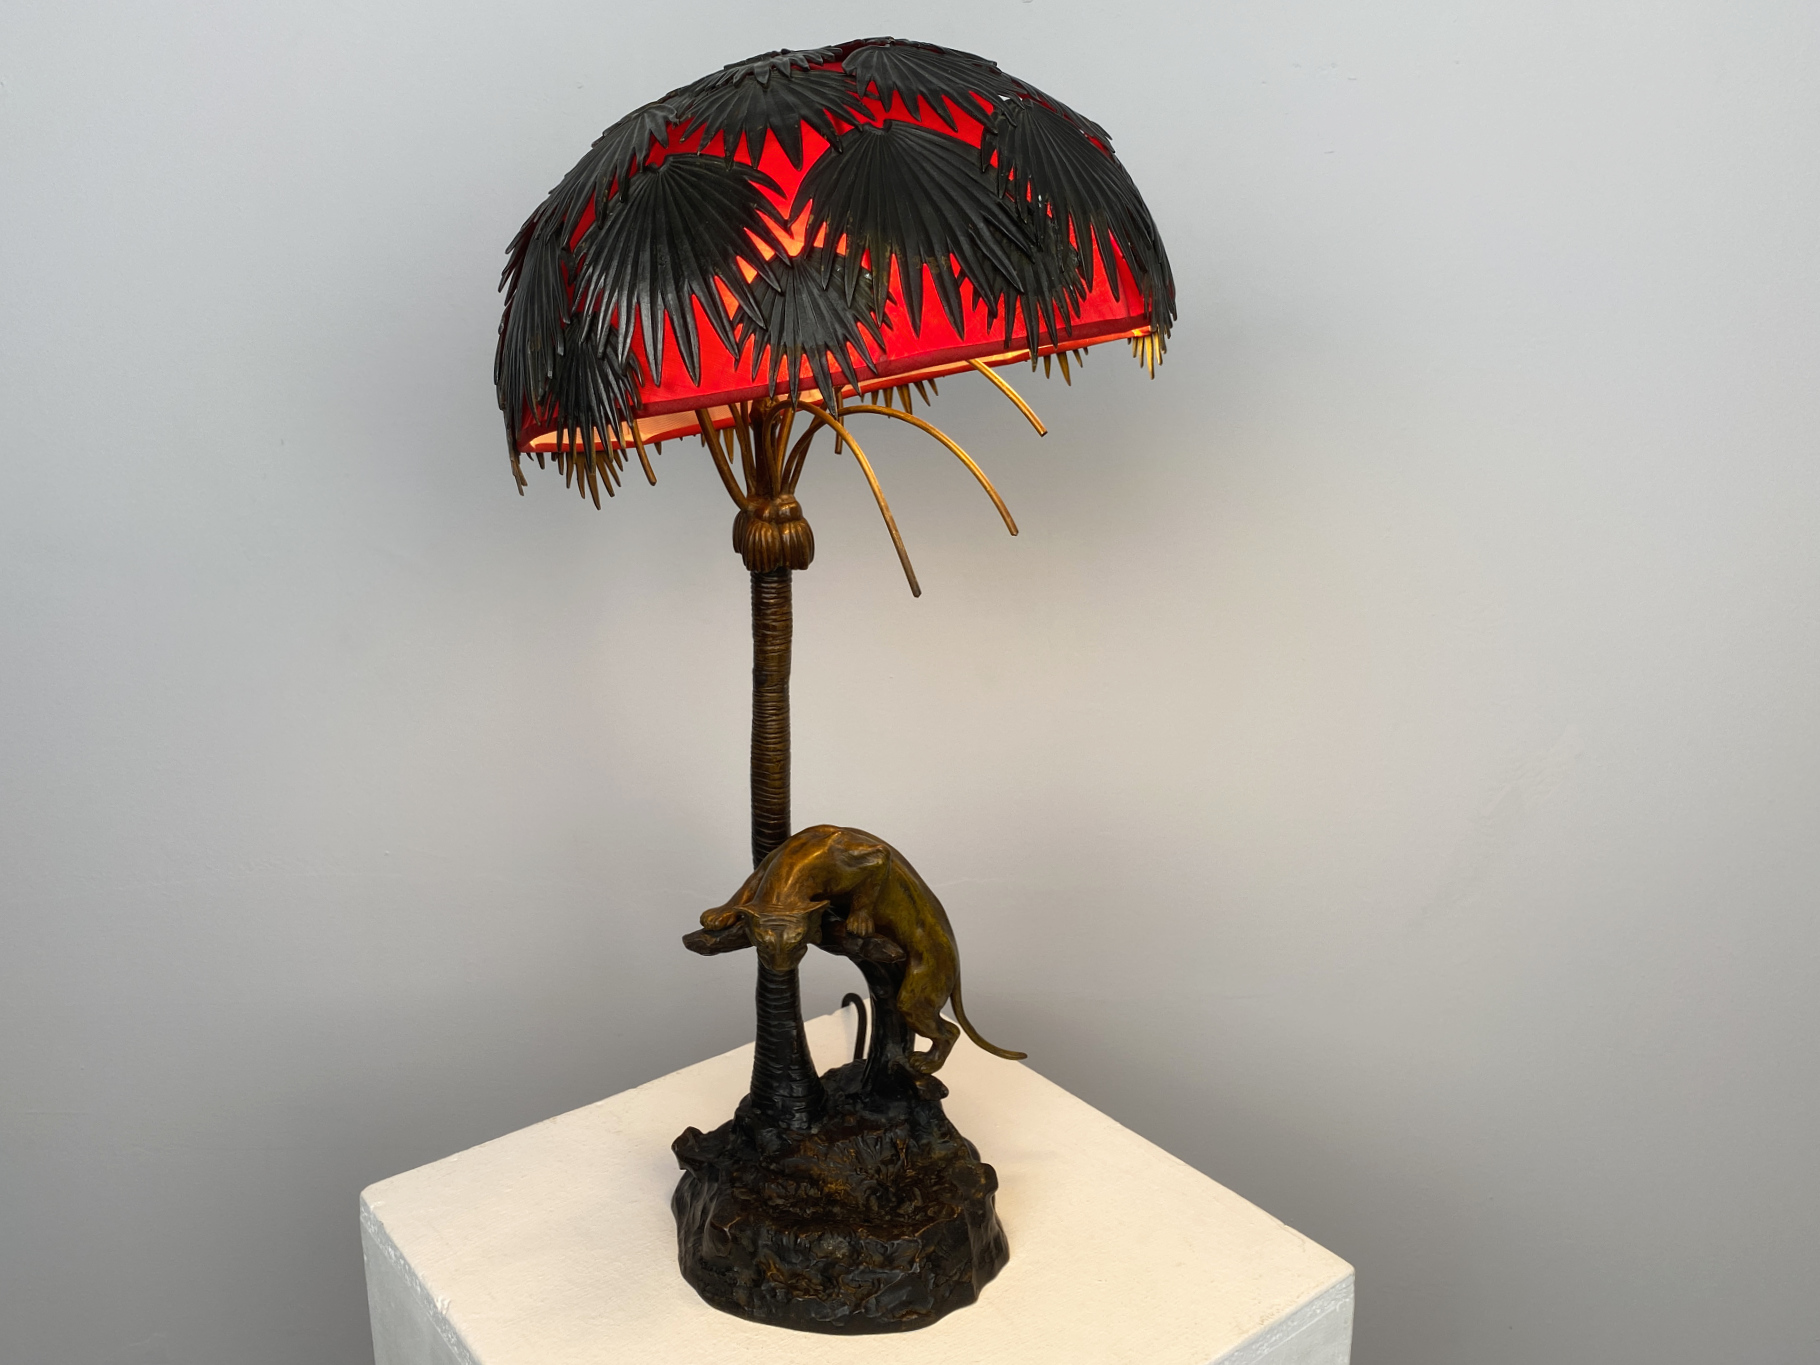 Table Lamp with a big Cat / Puma Figure, Bronze, Art Deco, signed Tusco, France, 1920s